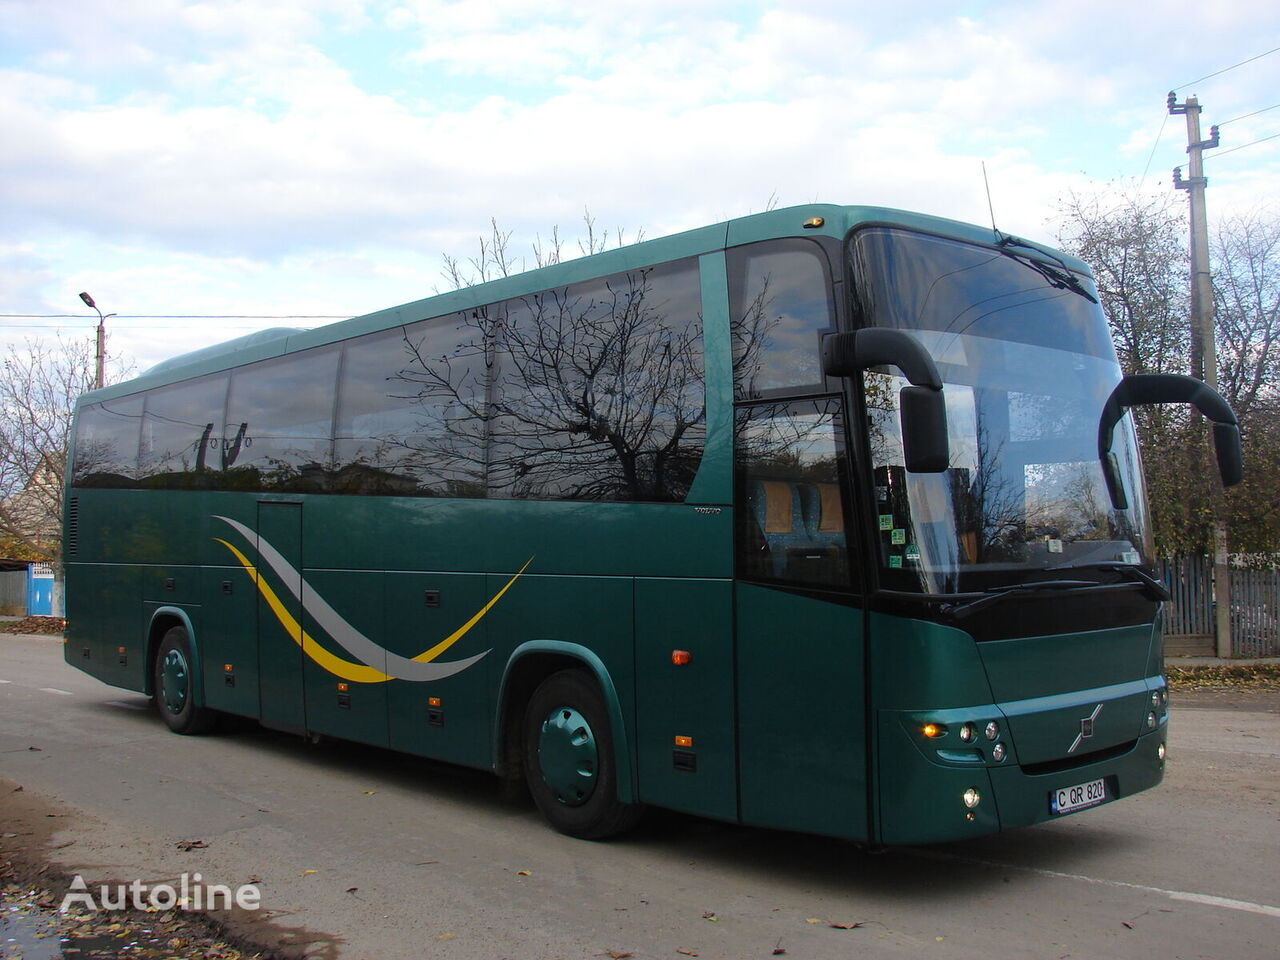 Volvo 9900 coach bus